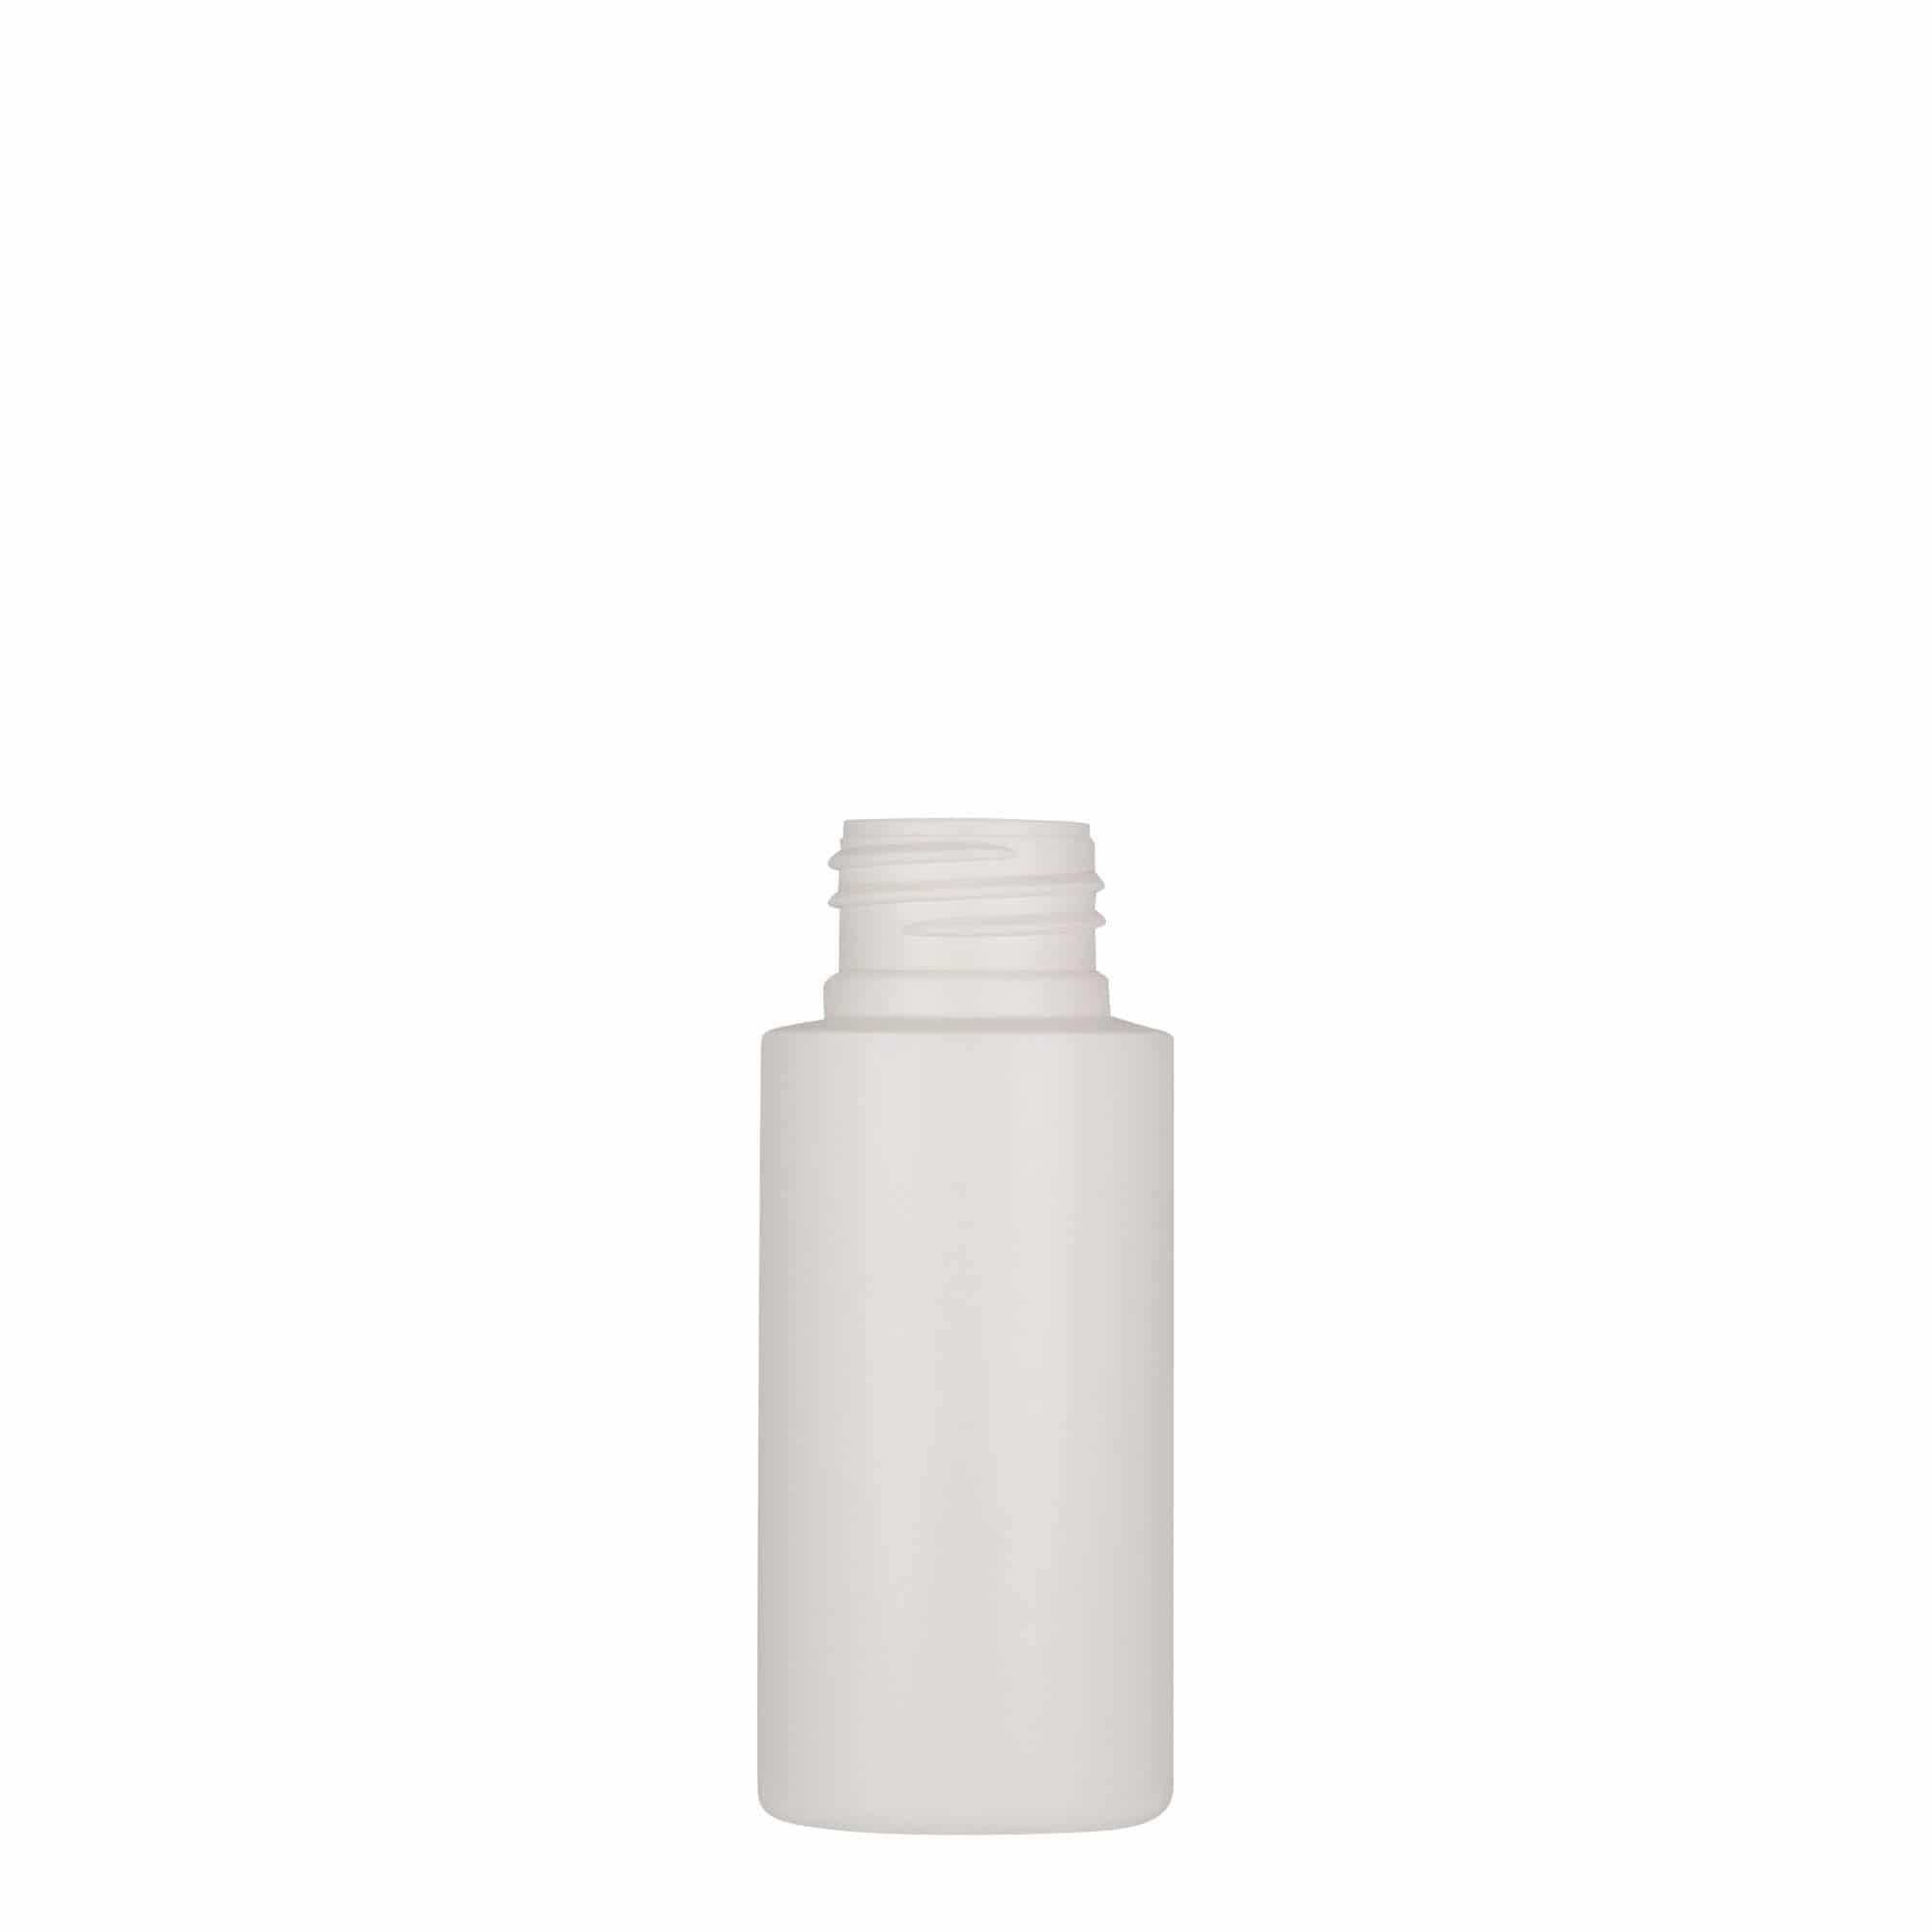 50 ml plastic bottle 'Pipe', HDPE, white, closure: GPI 24/410